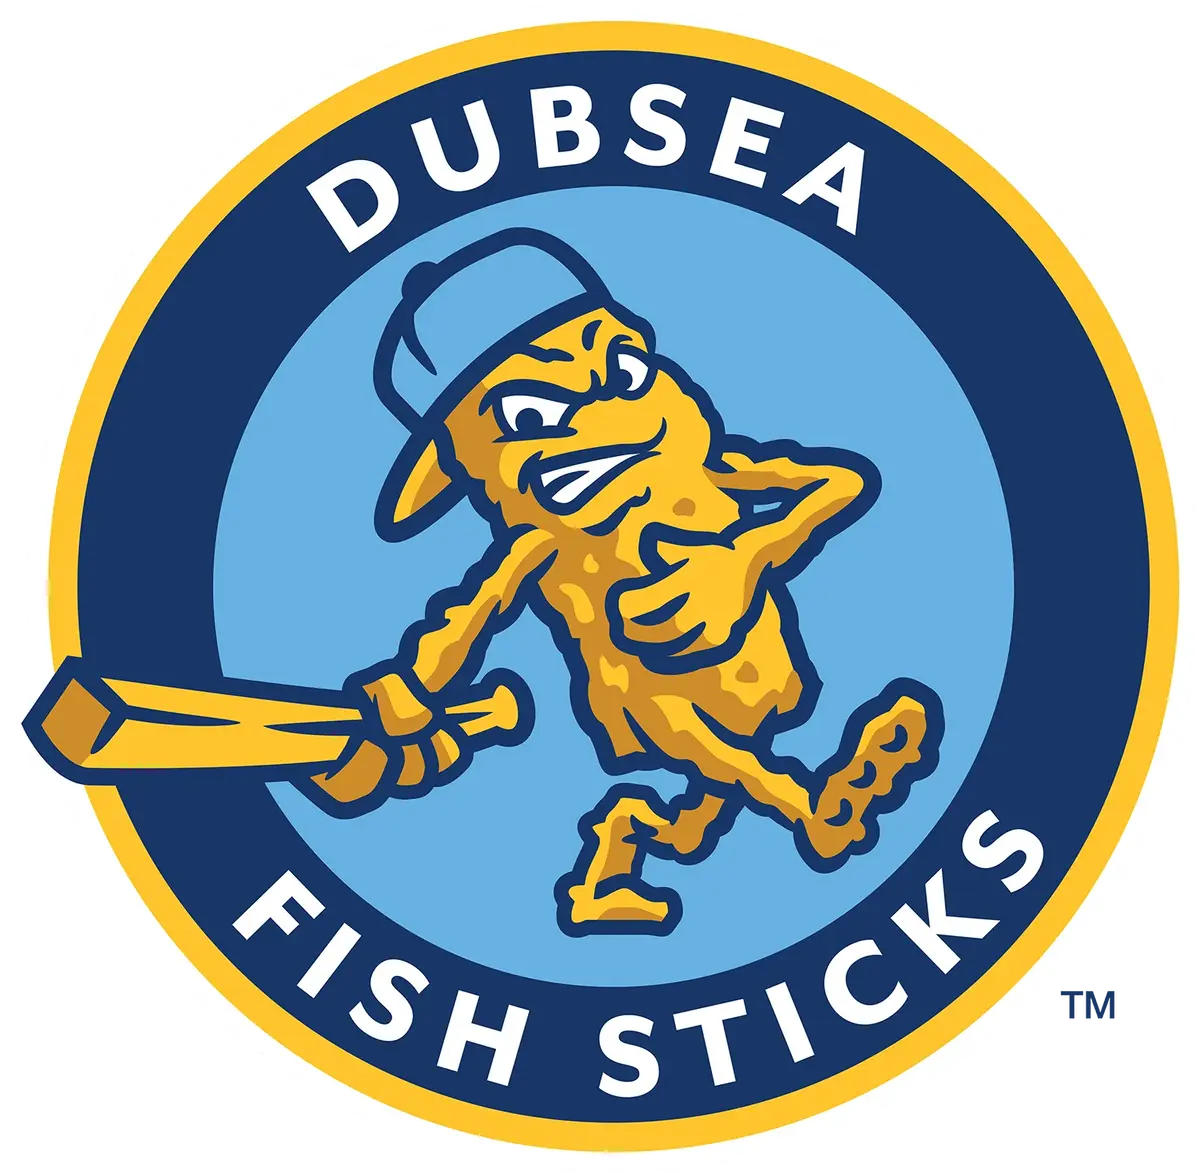 June 15th | Redmond Dudes vs DubSea Fish Sticks